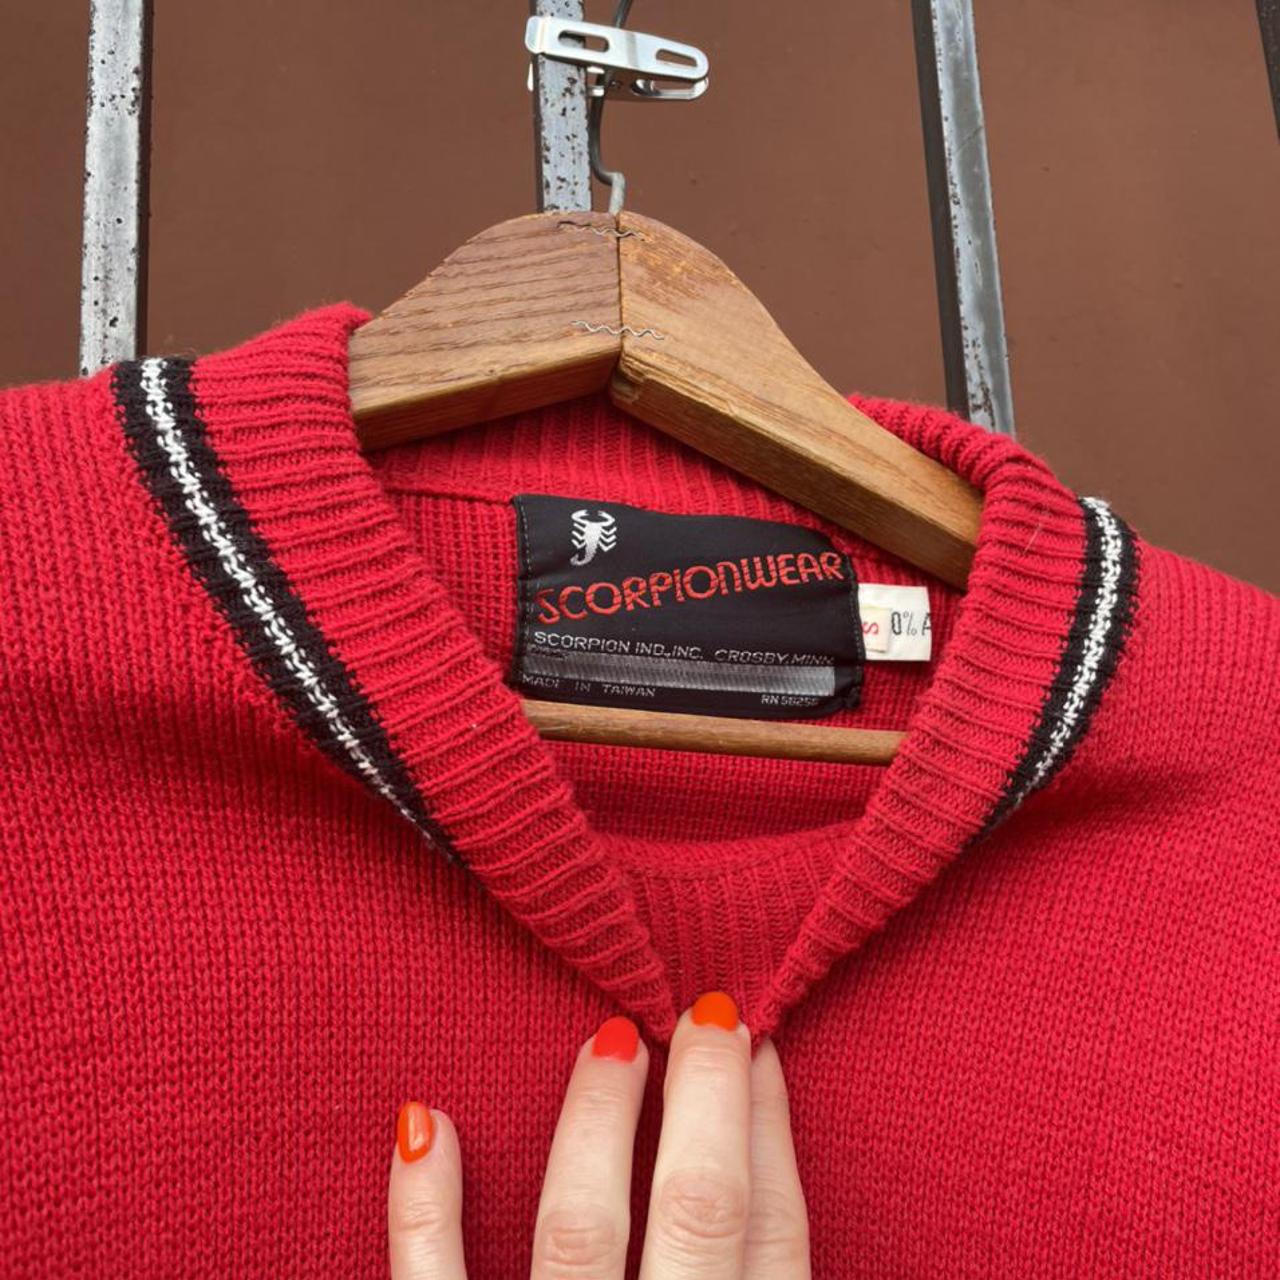 Product Image 2 - Scorpionwear acrylic knit pullover -